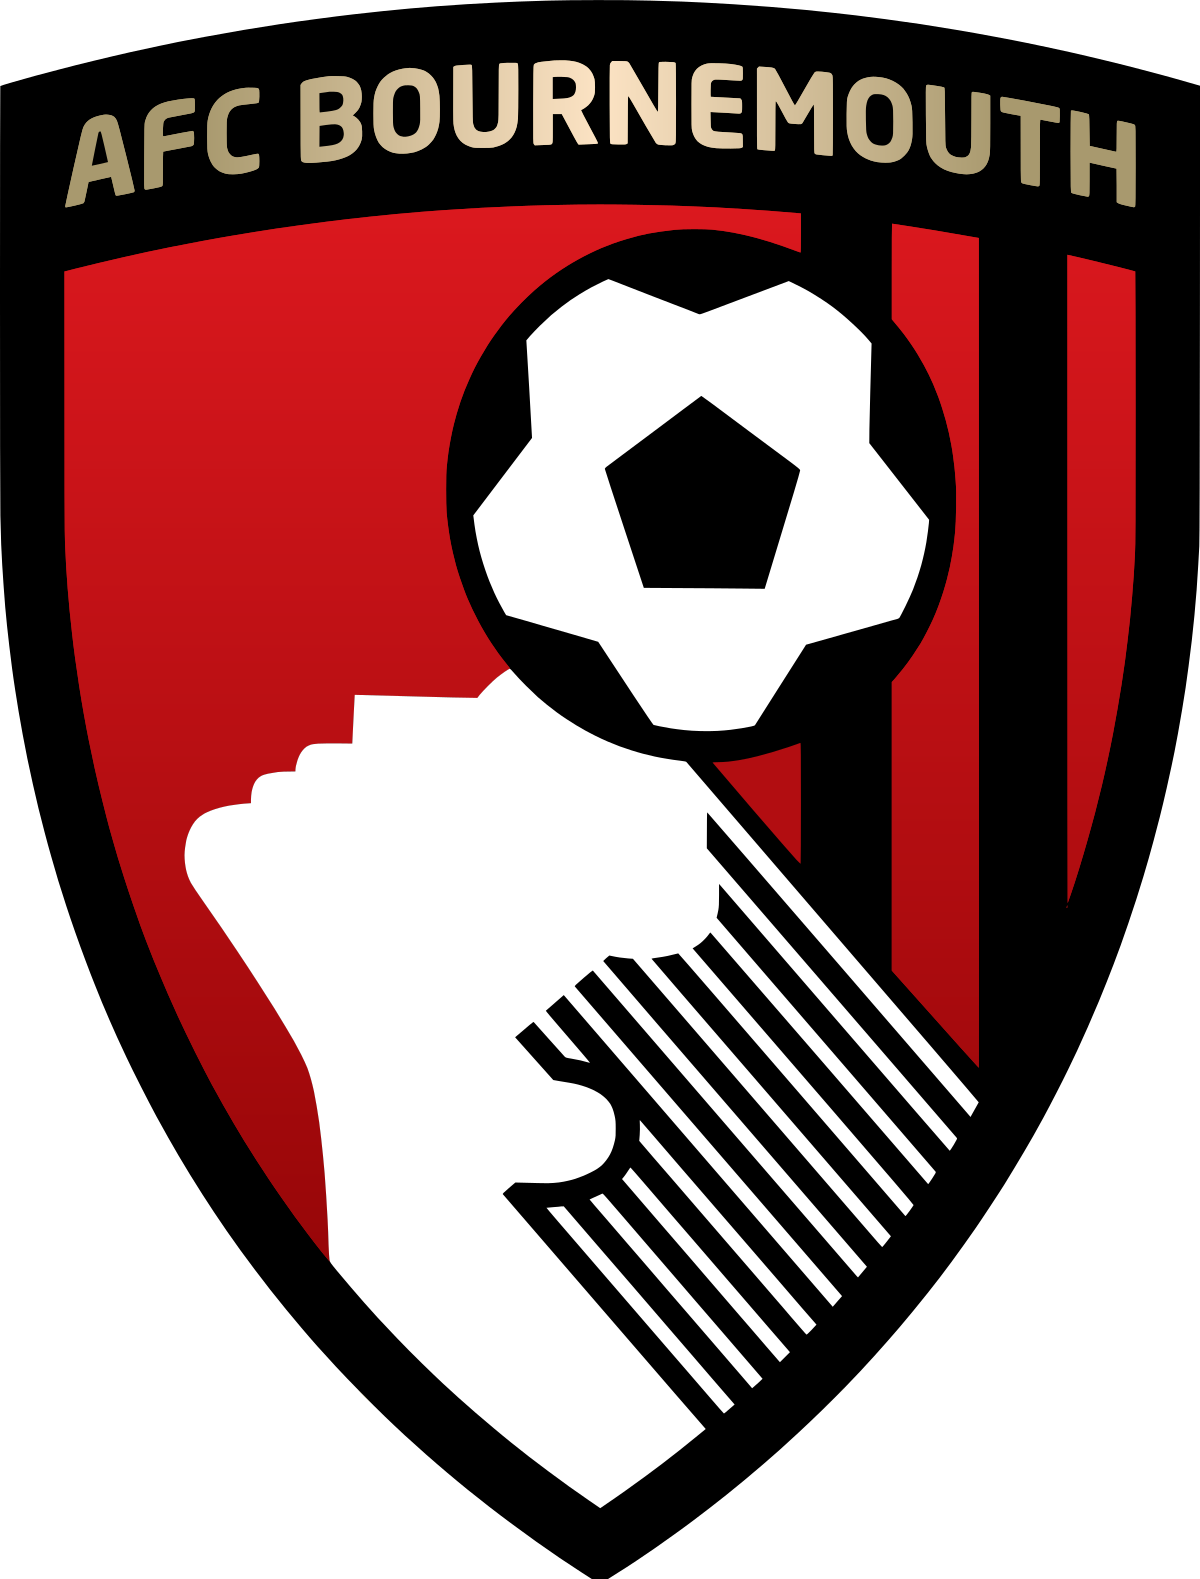 Bournemouth U-21 logo